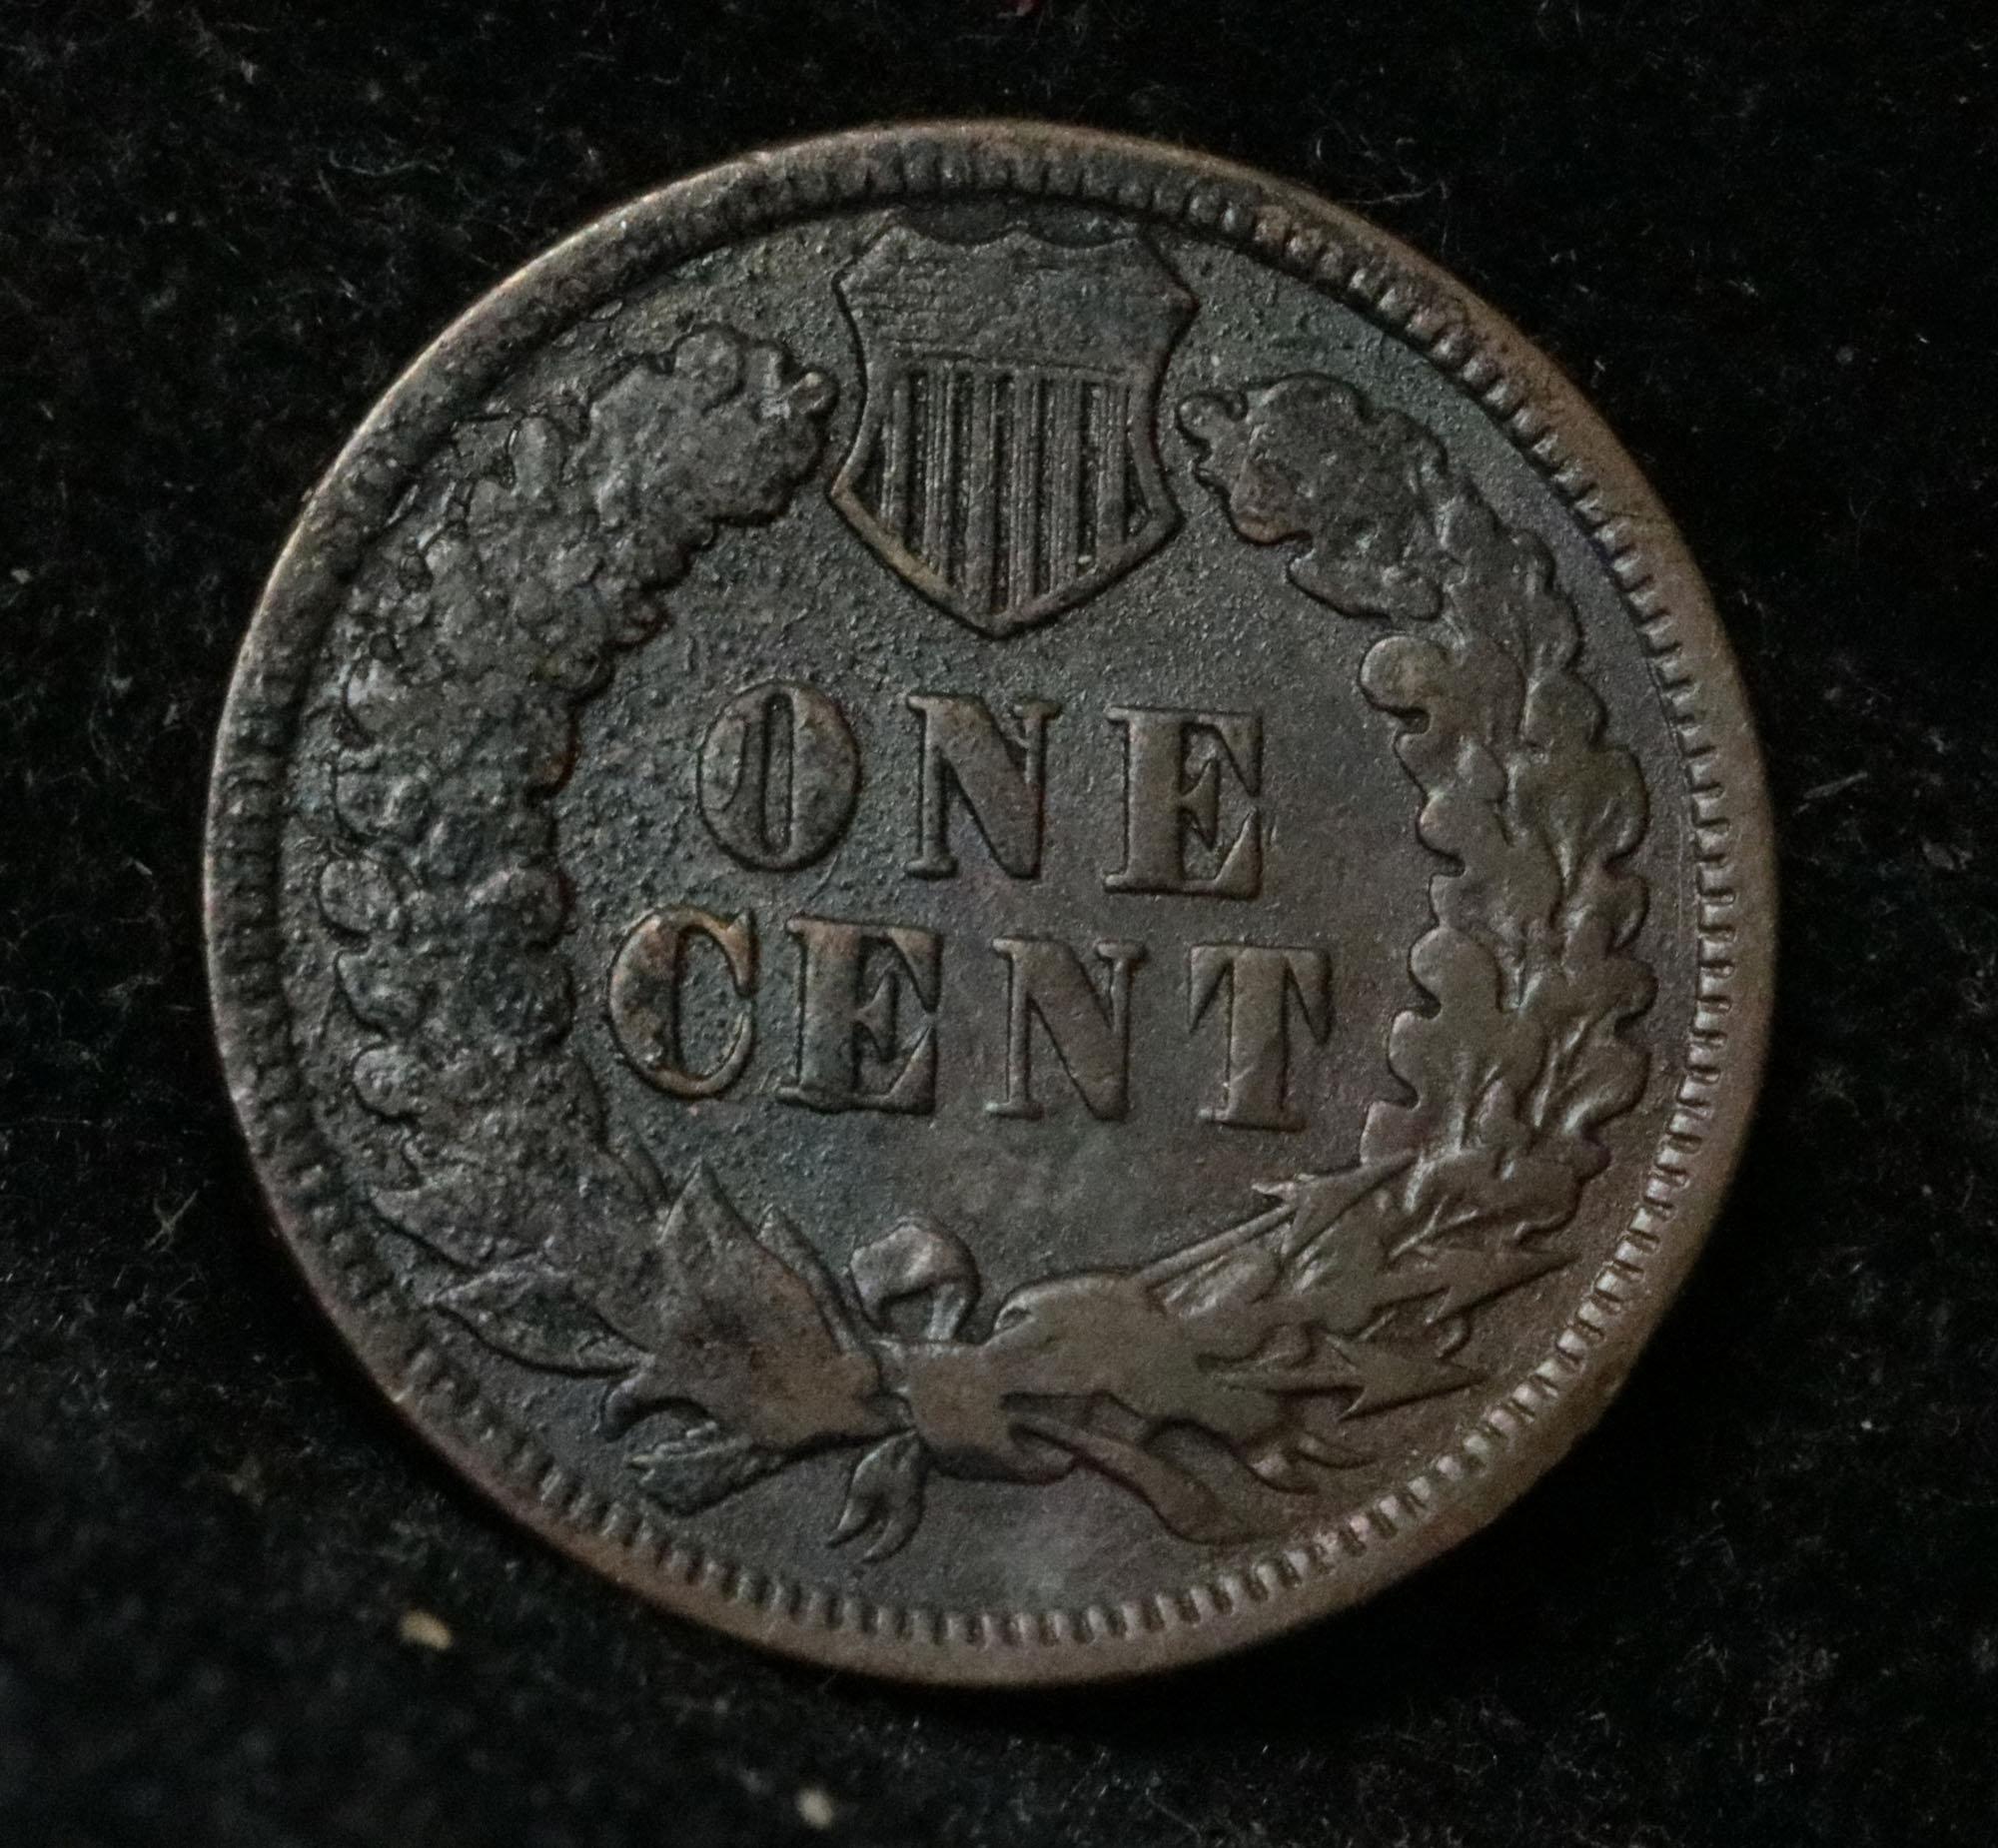 1881 Indian Cent 1c Grades vf+